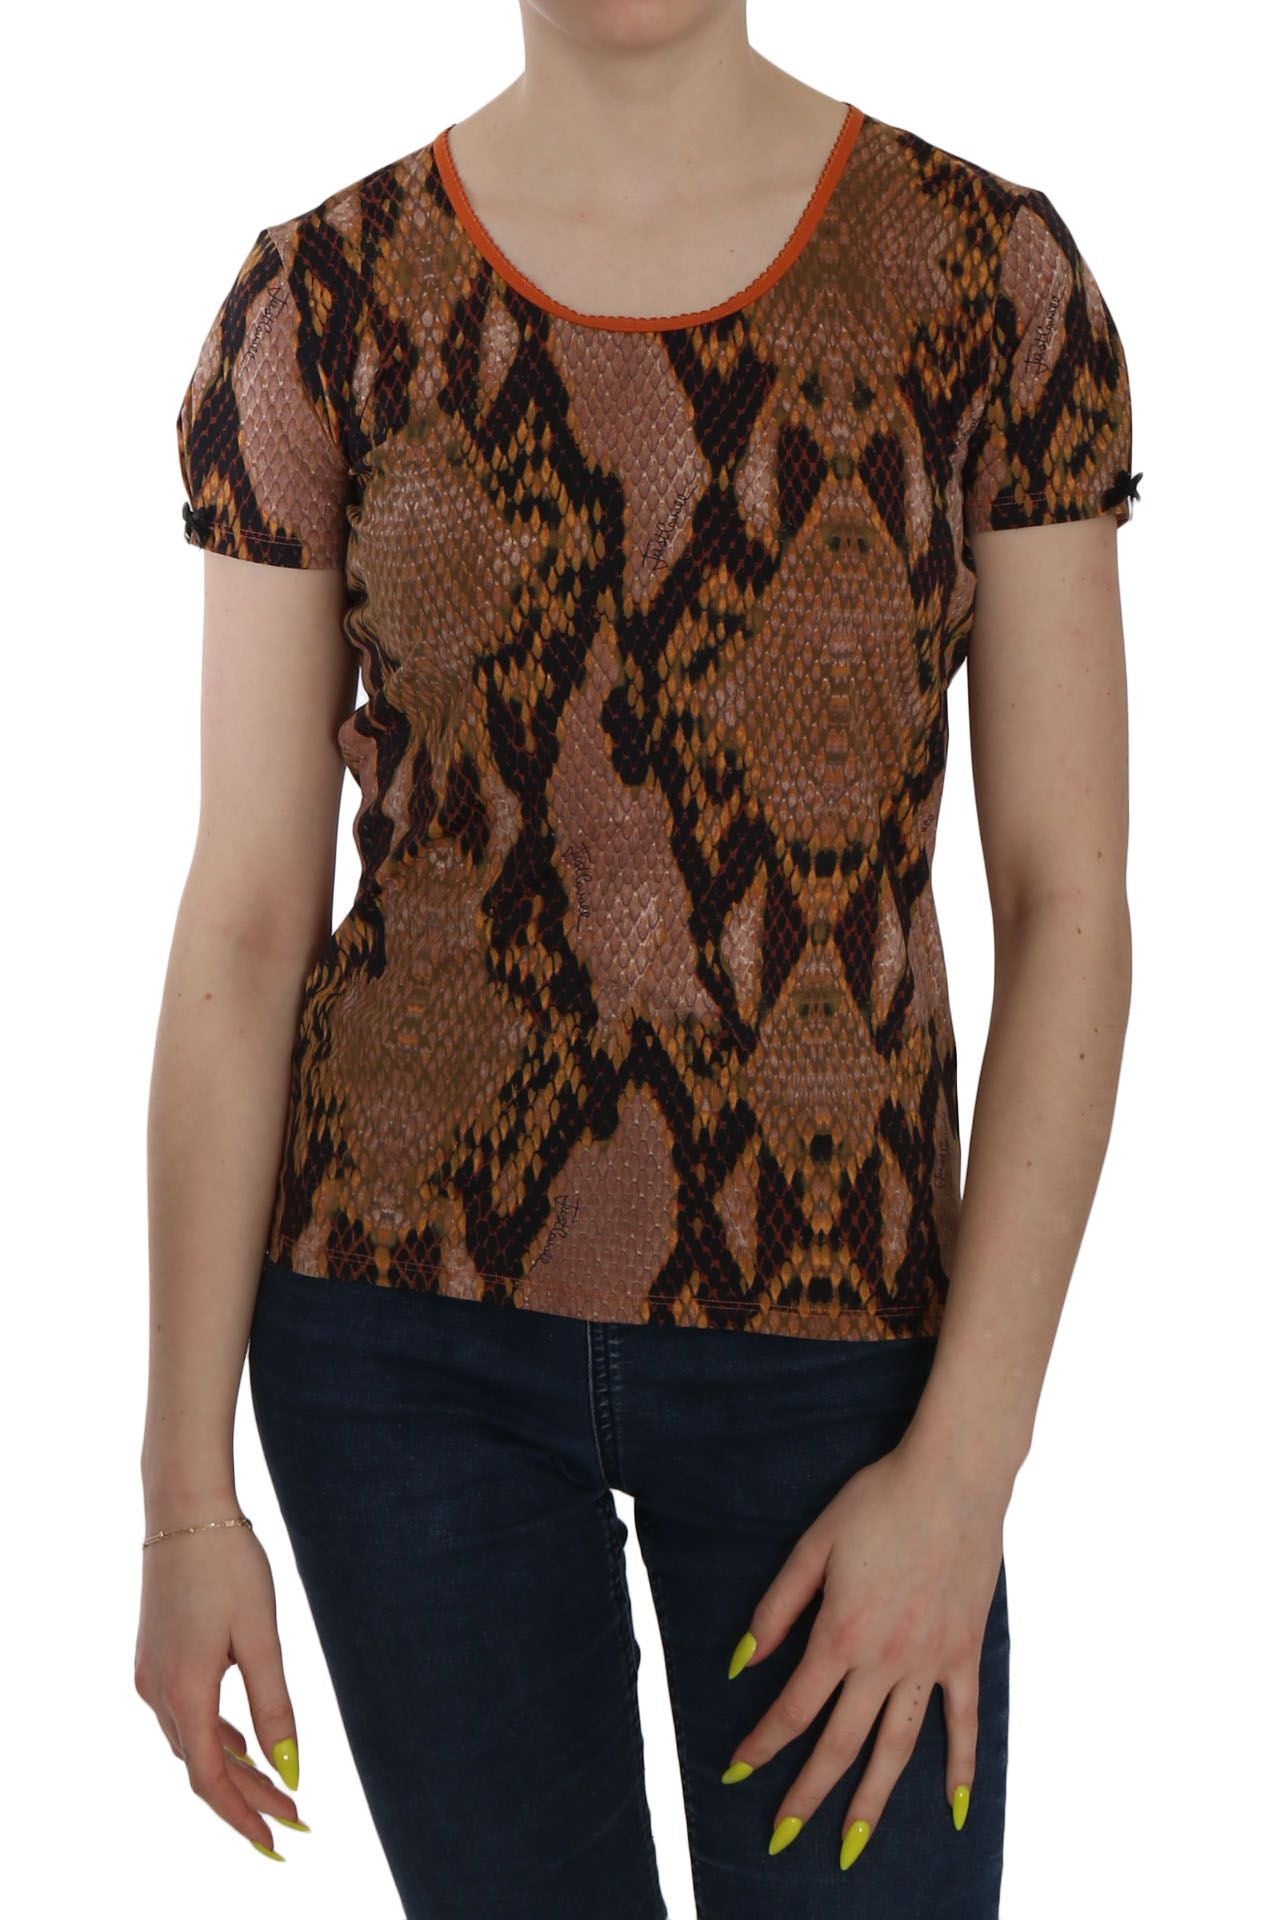 Just Cavalli Snake Skin Print Short Sleeve Top T-shirt - Gio Beverly Hills